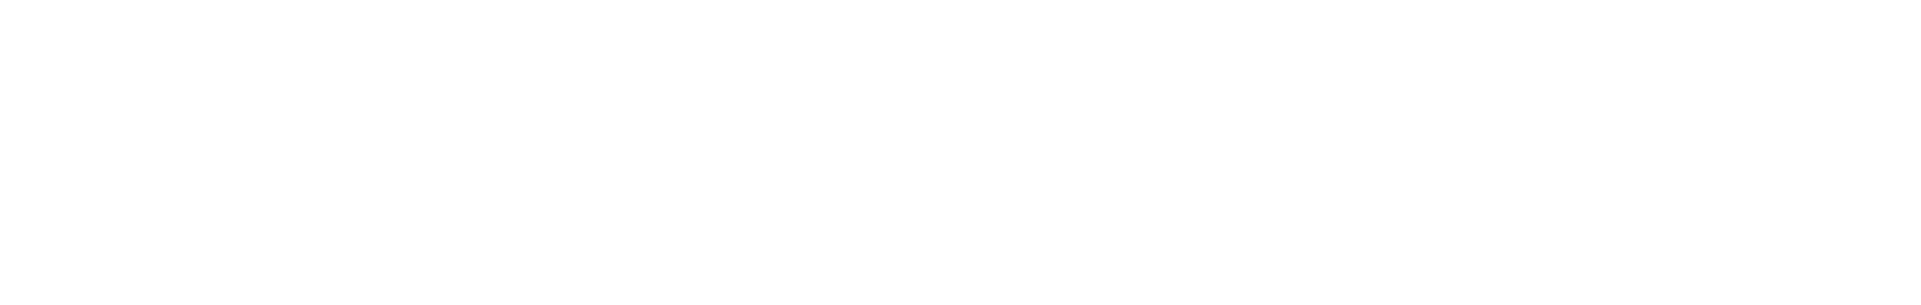 artist_t